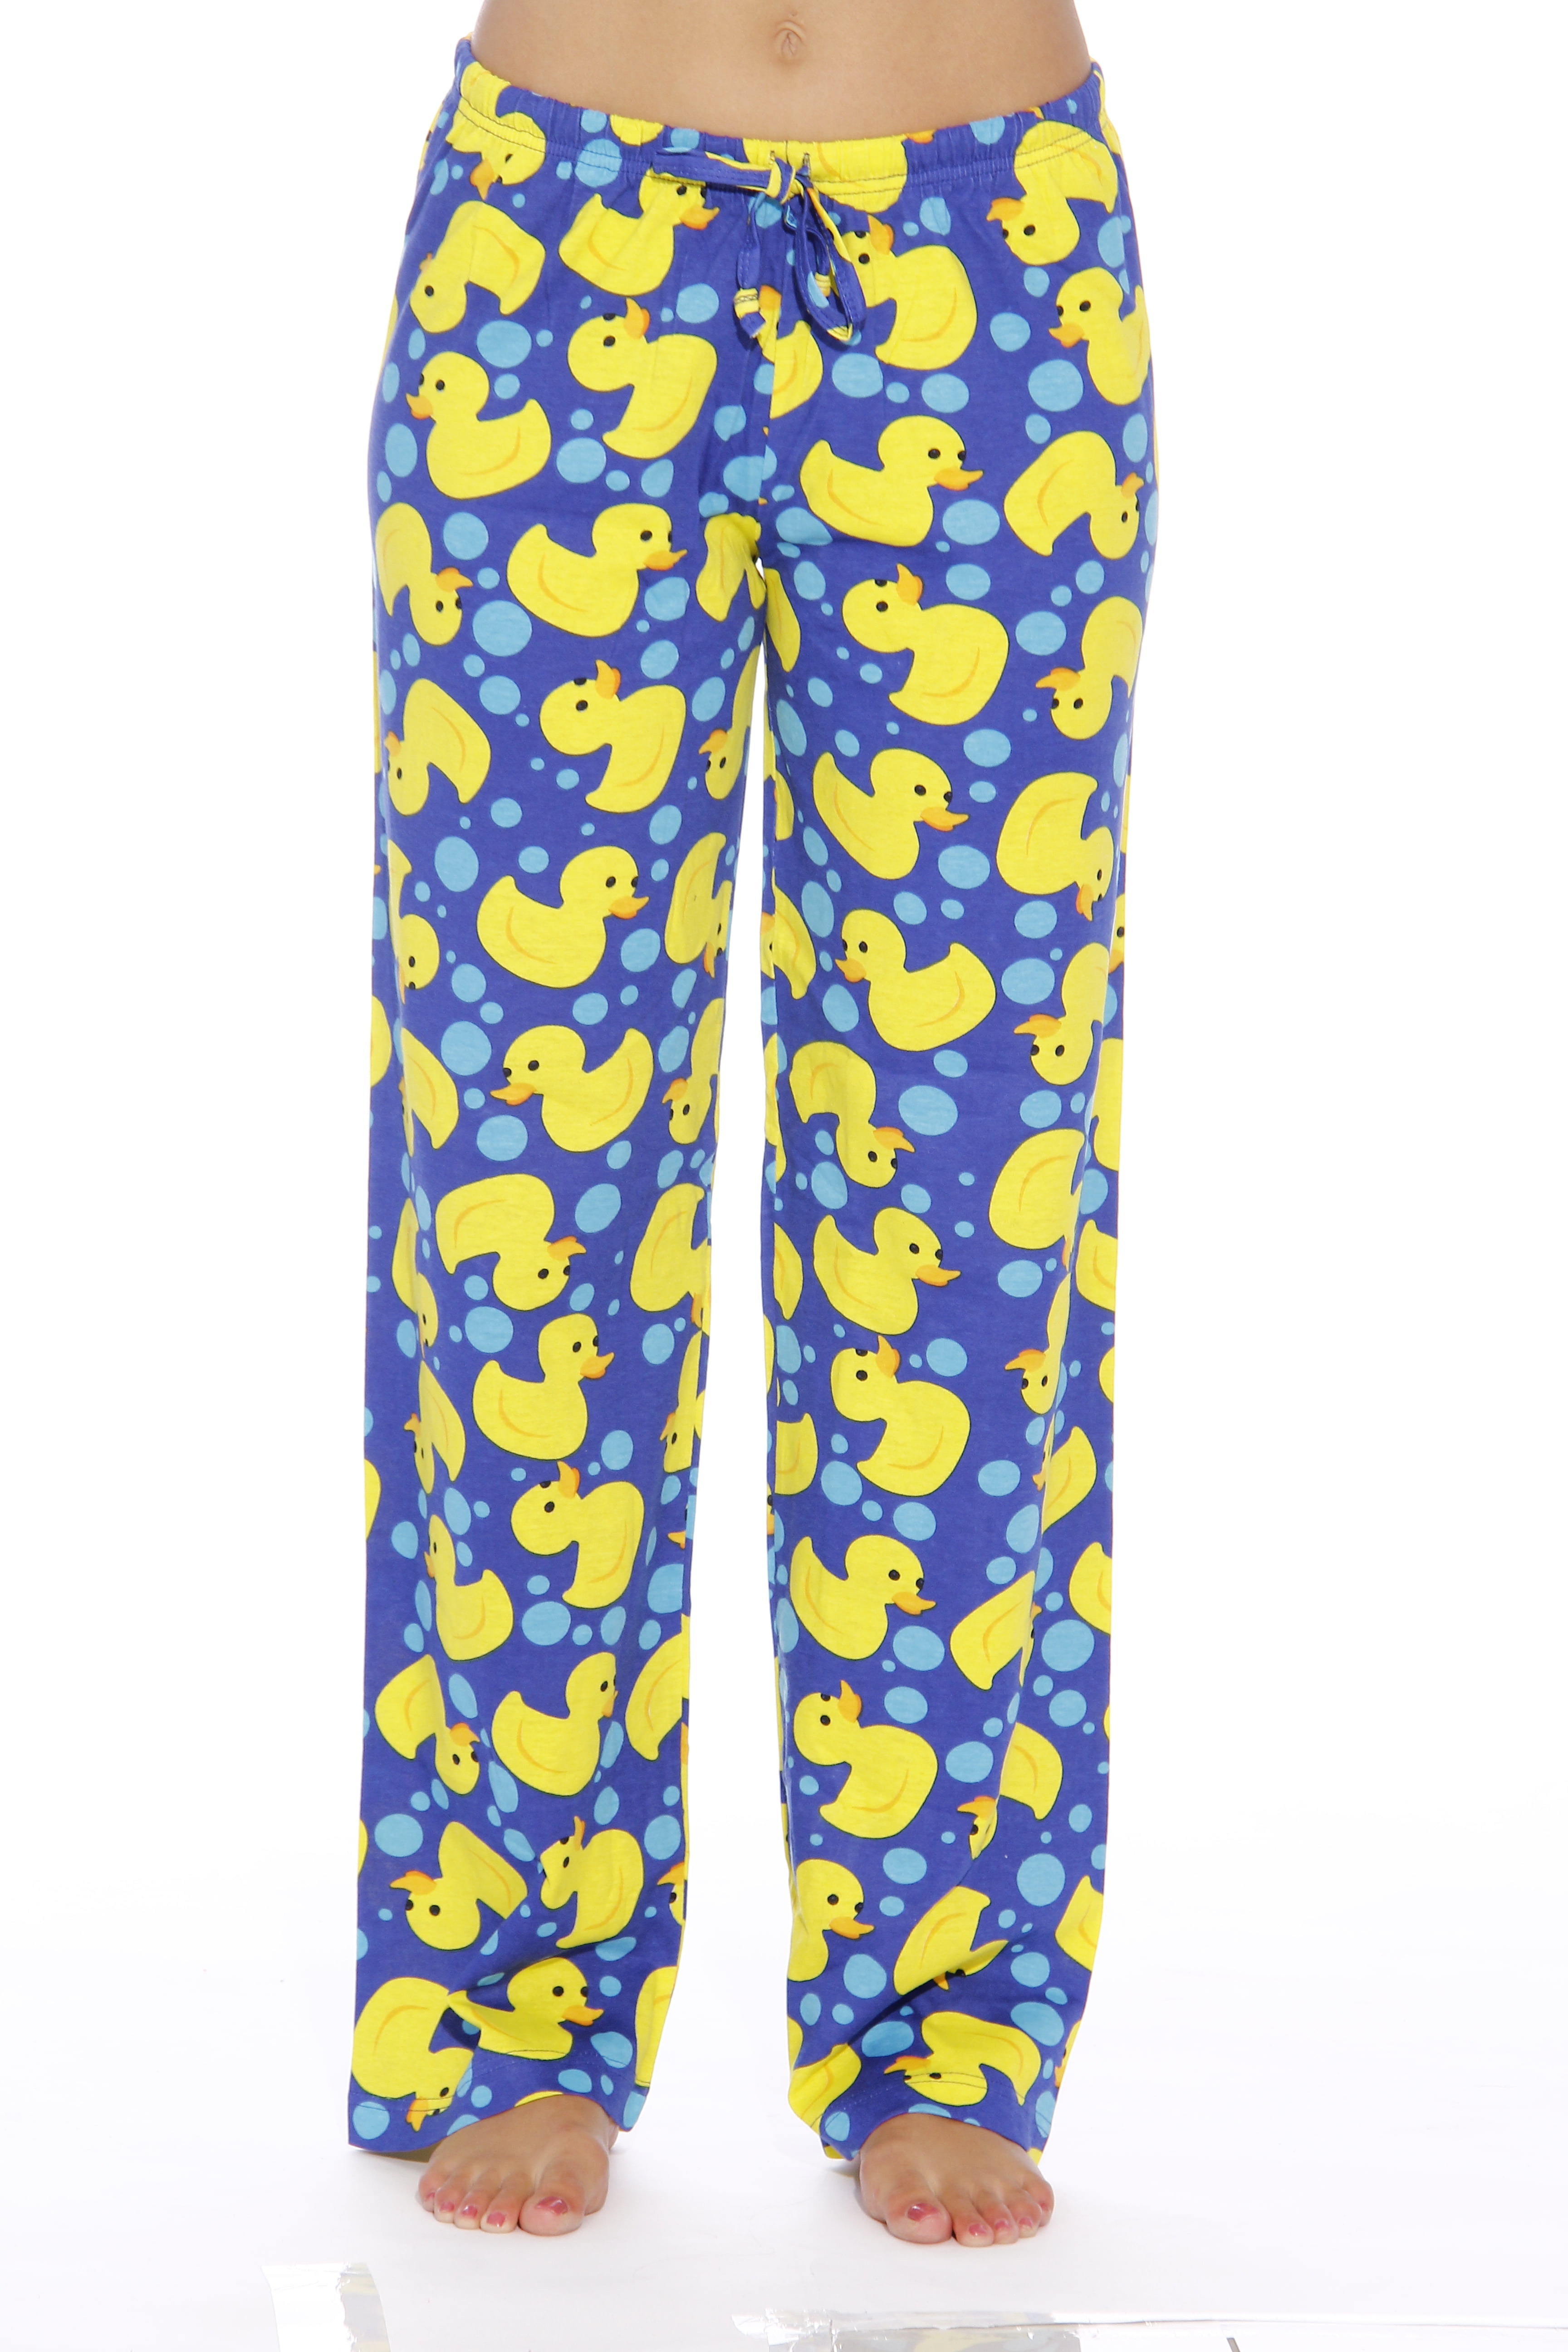 Aiboria Womens Pajamas Pants Cotton Dots Lounge Sleep Pants with Pockets